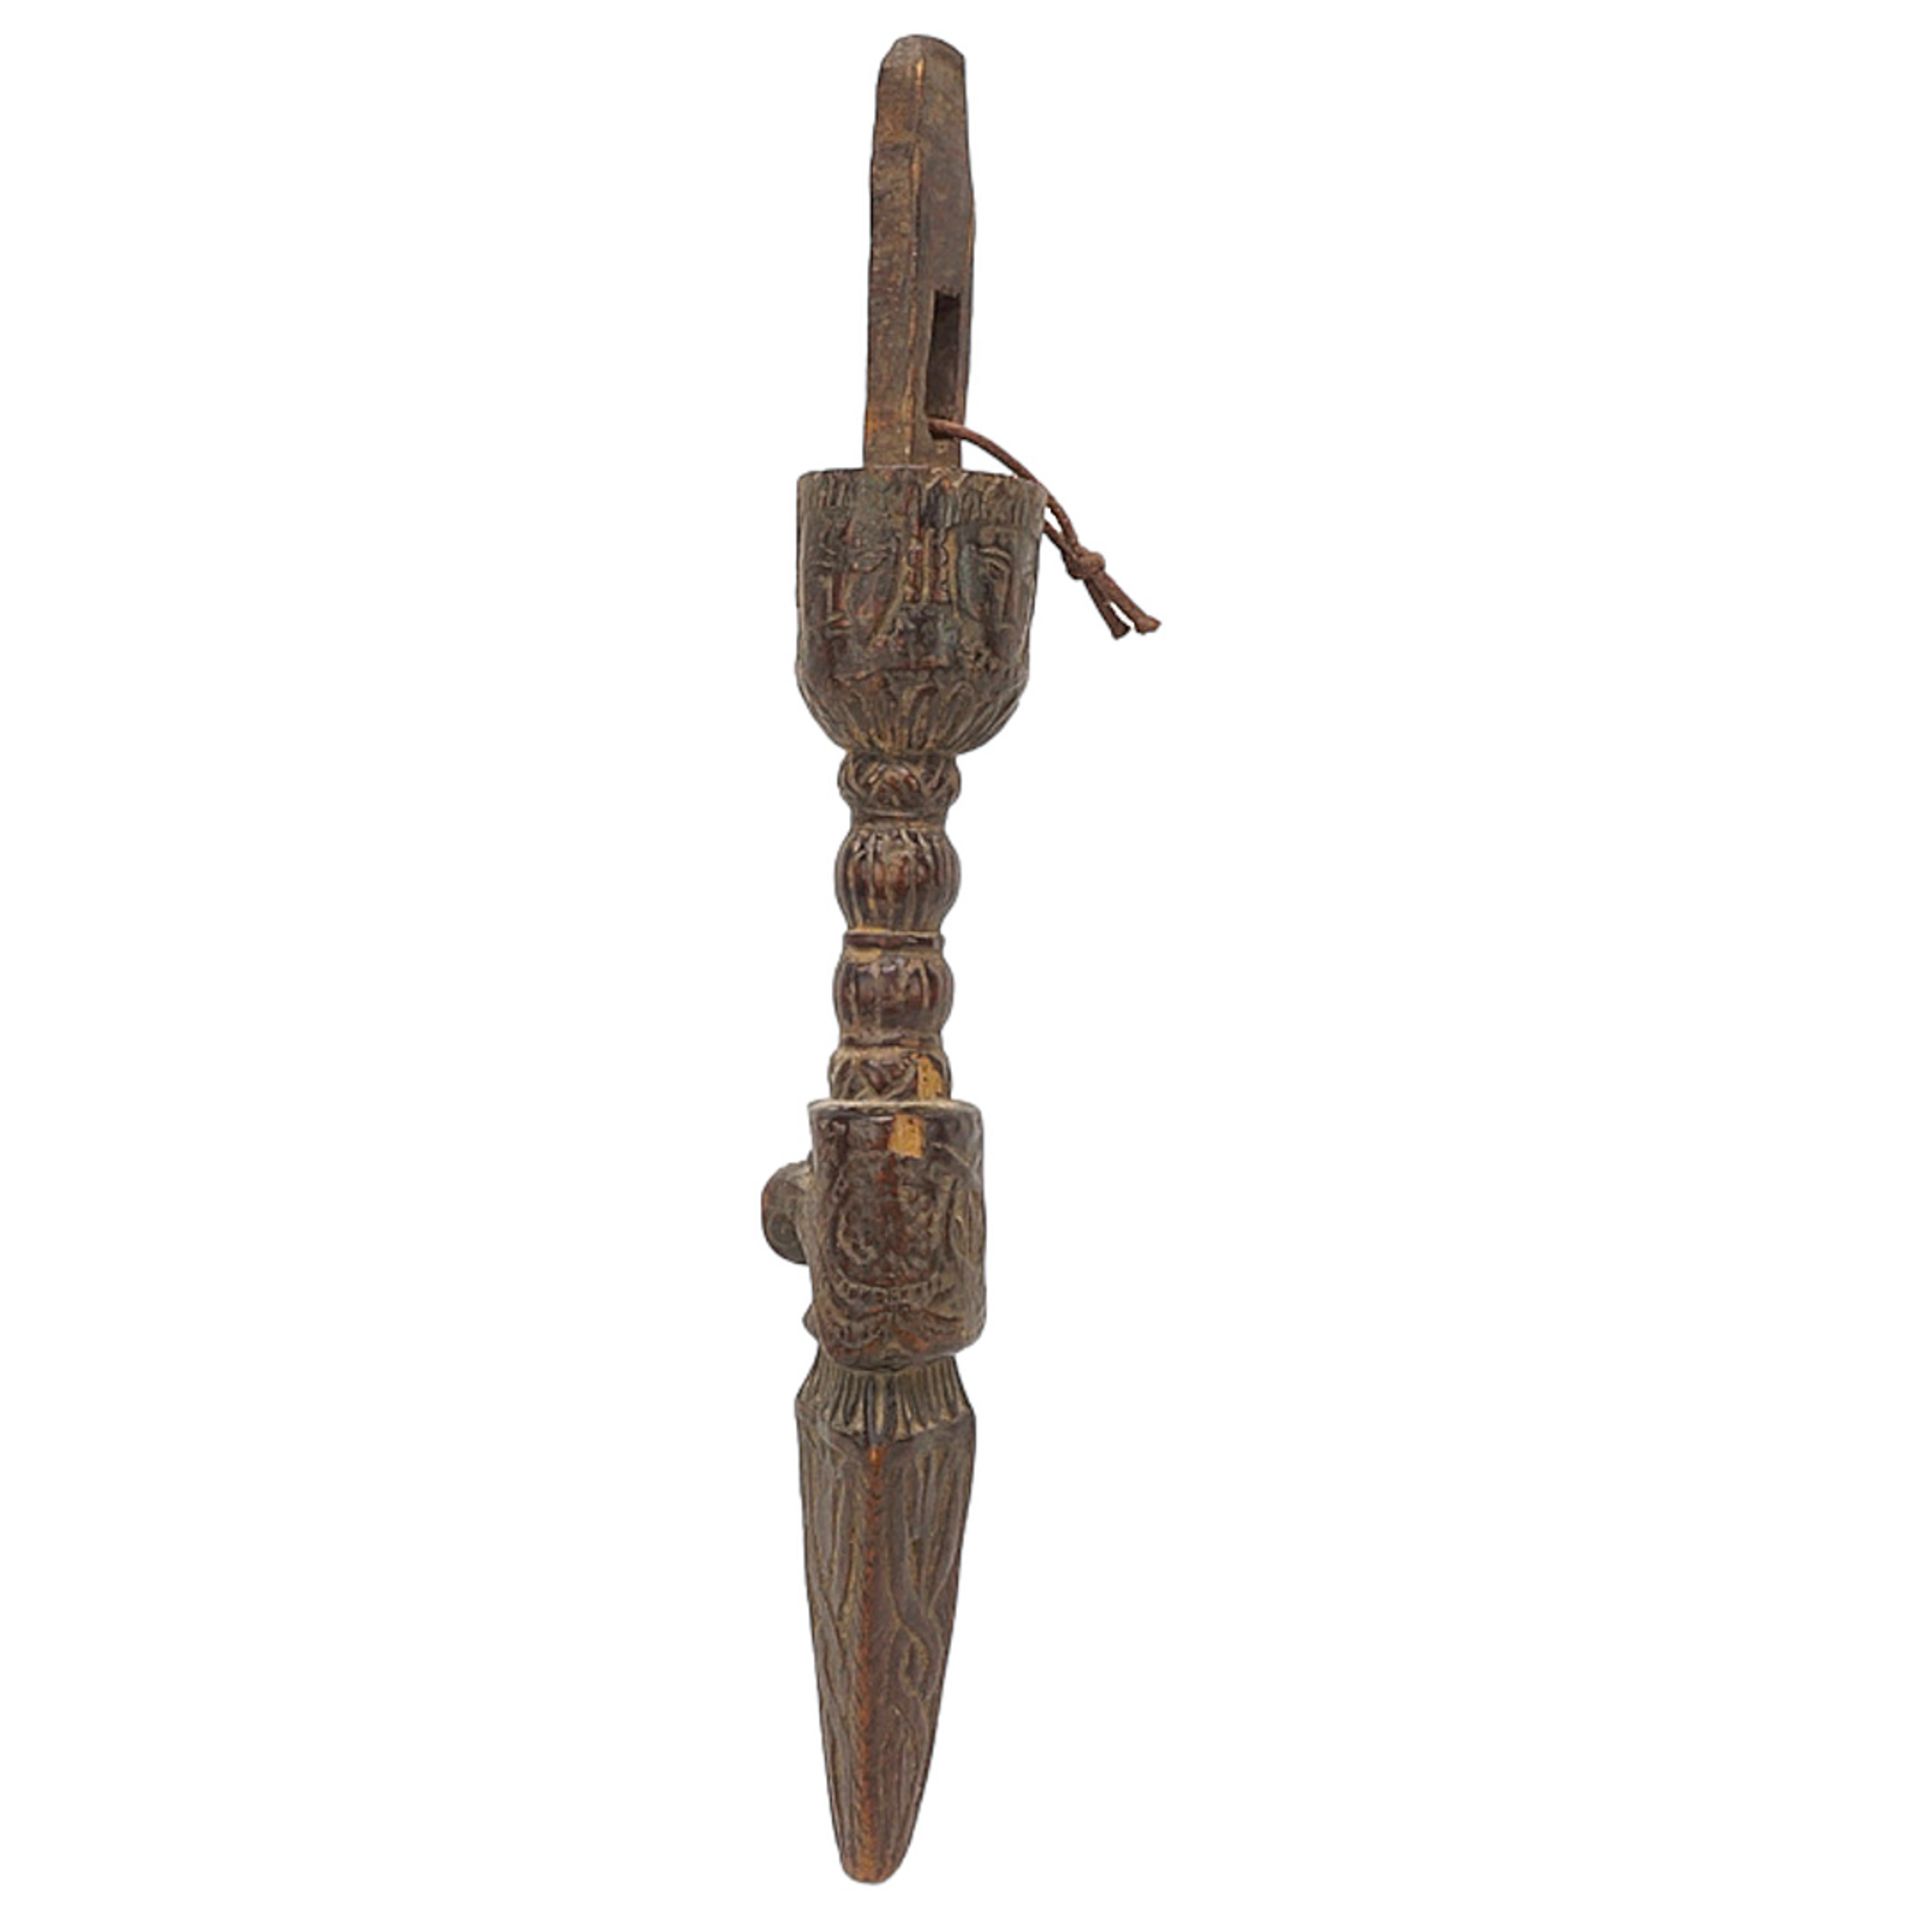 Phurba / Ritual Dagger, Tibet / Nepal, 19th century - Image 2 of 4